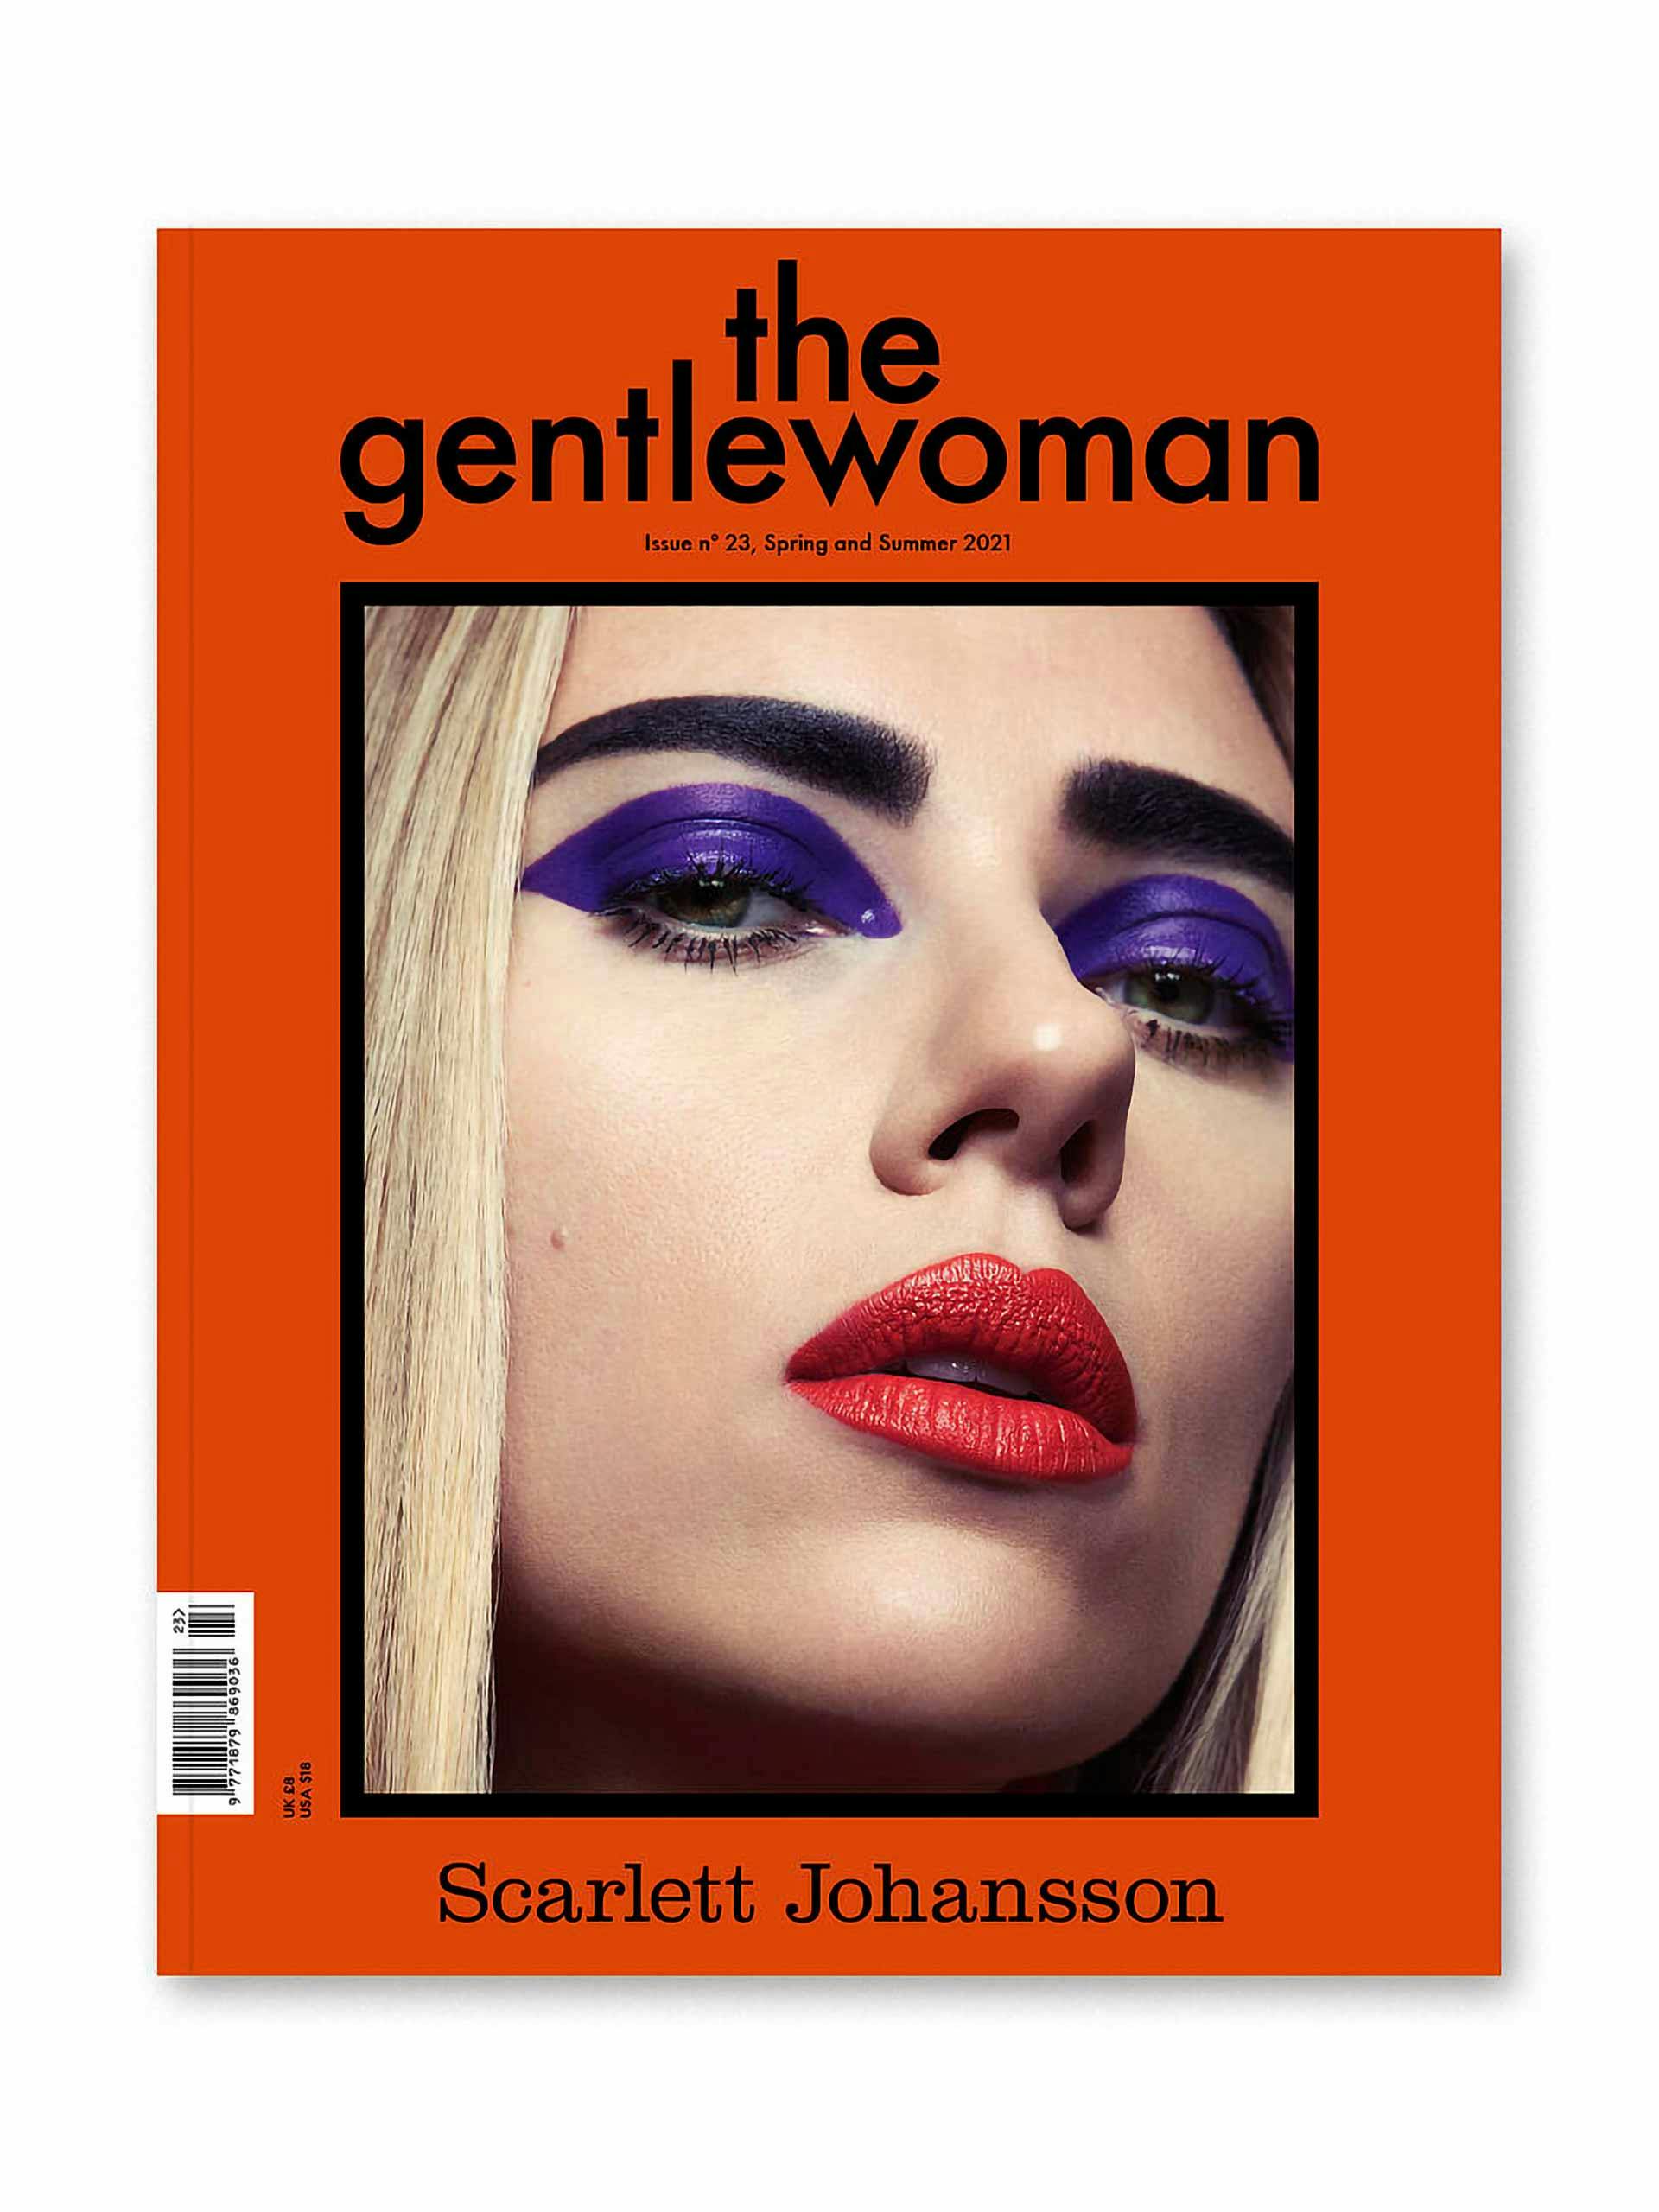 Scarlett Johansson, Issue no.23, Spring and Summer 2021